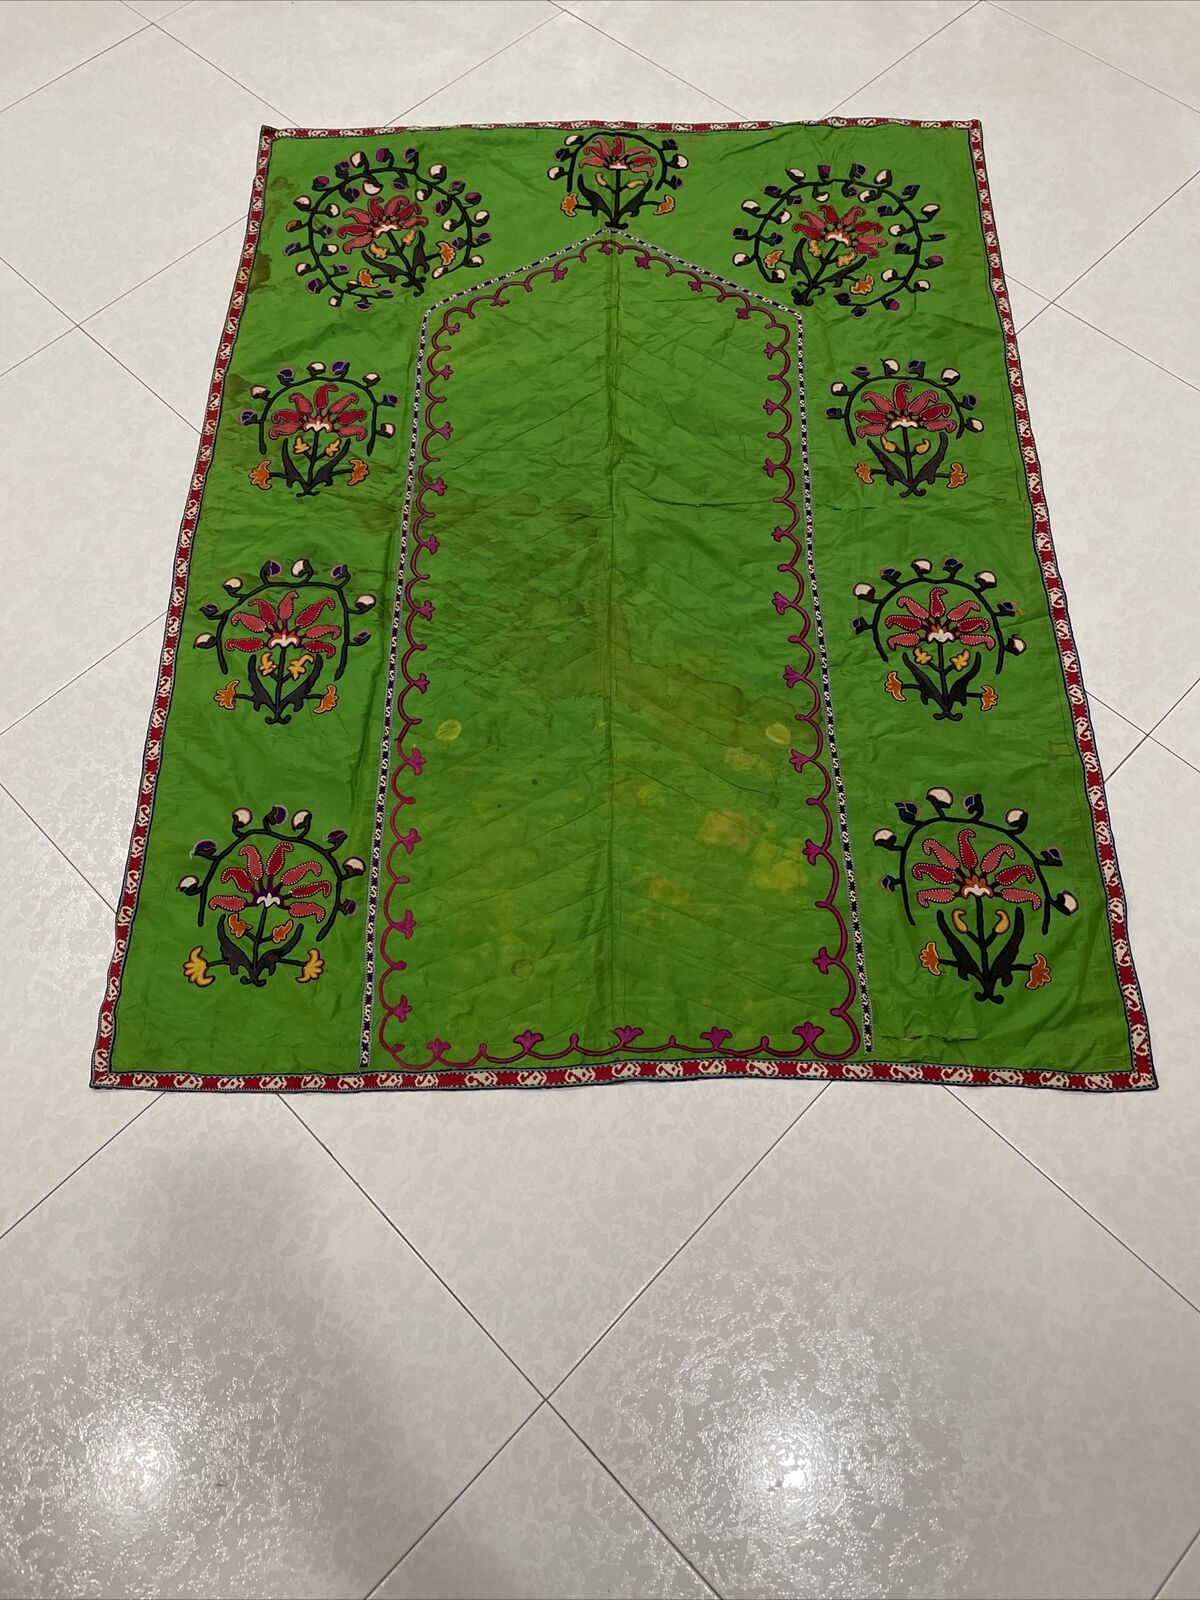 Antique Middle Eastern Suzani Textile, 54”x40